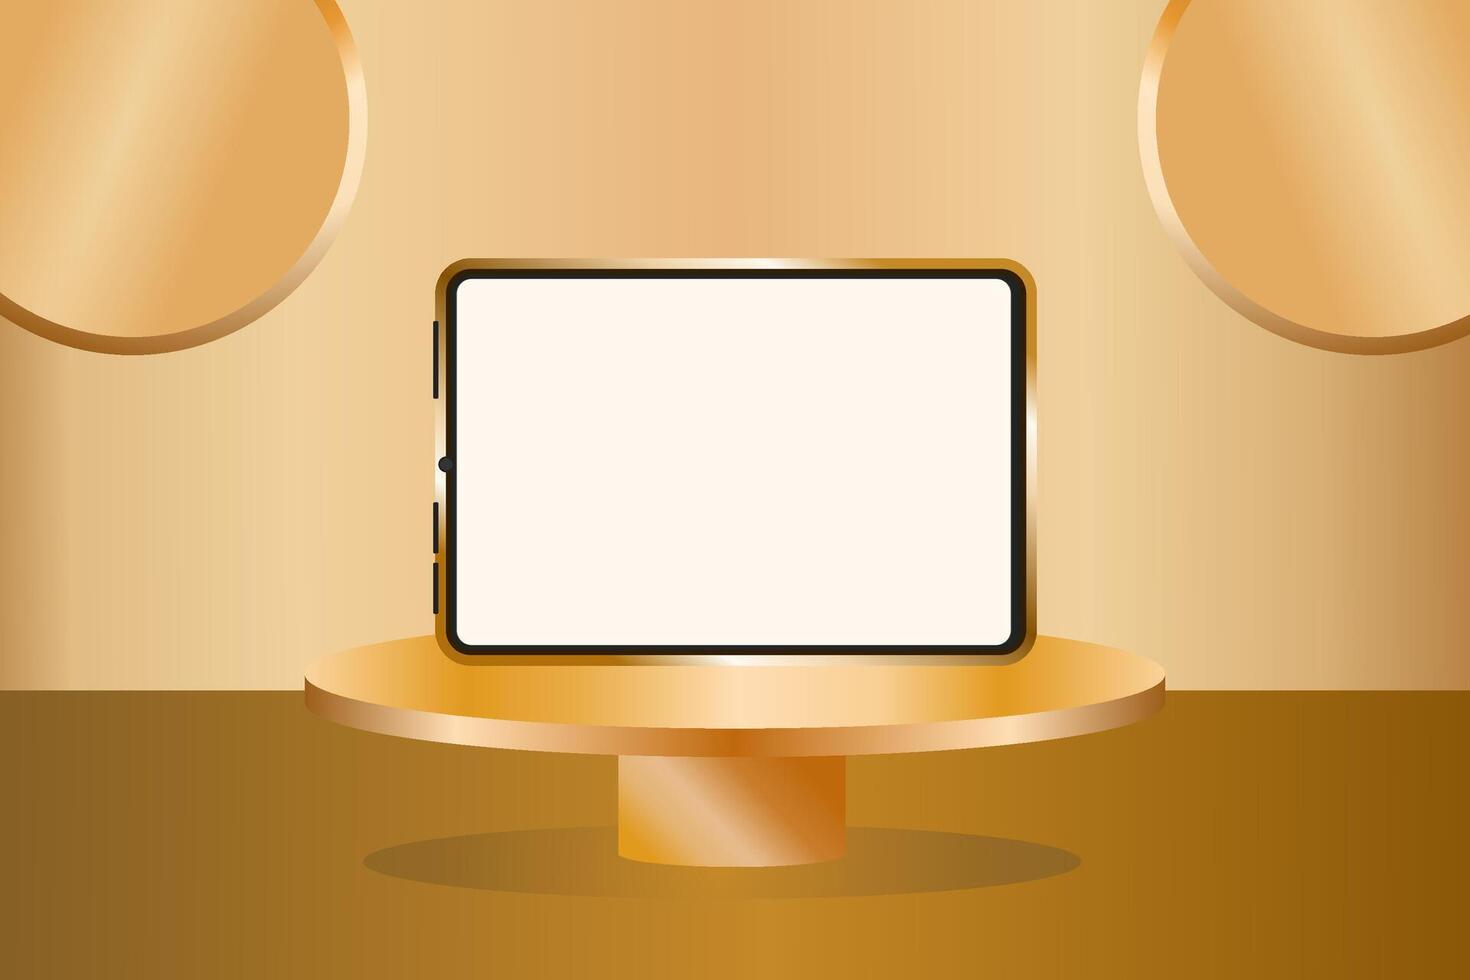 Smartphone prototype mockup gold background vector